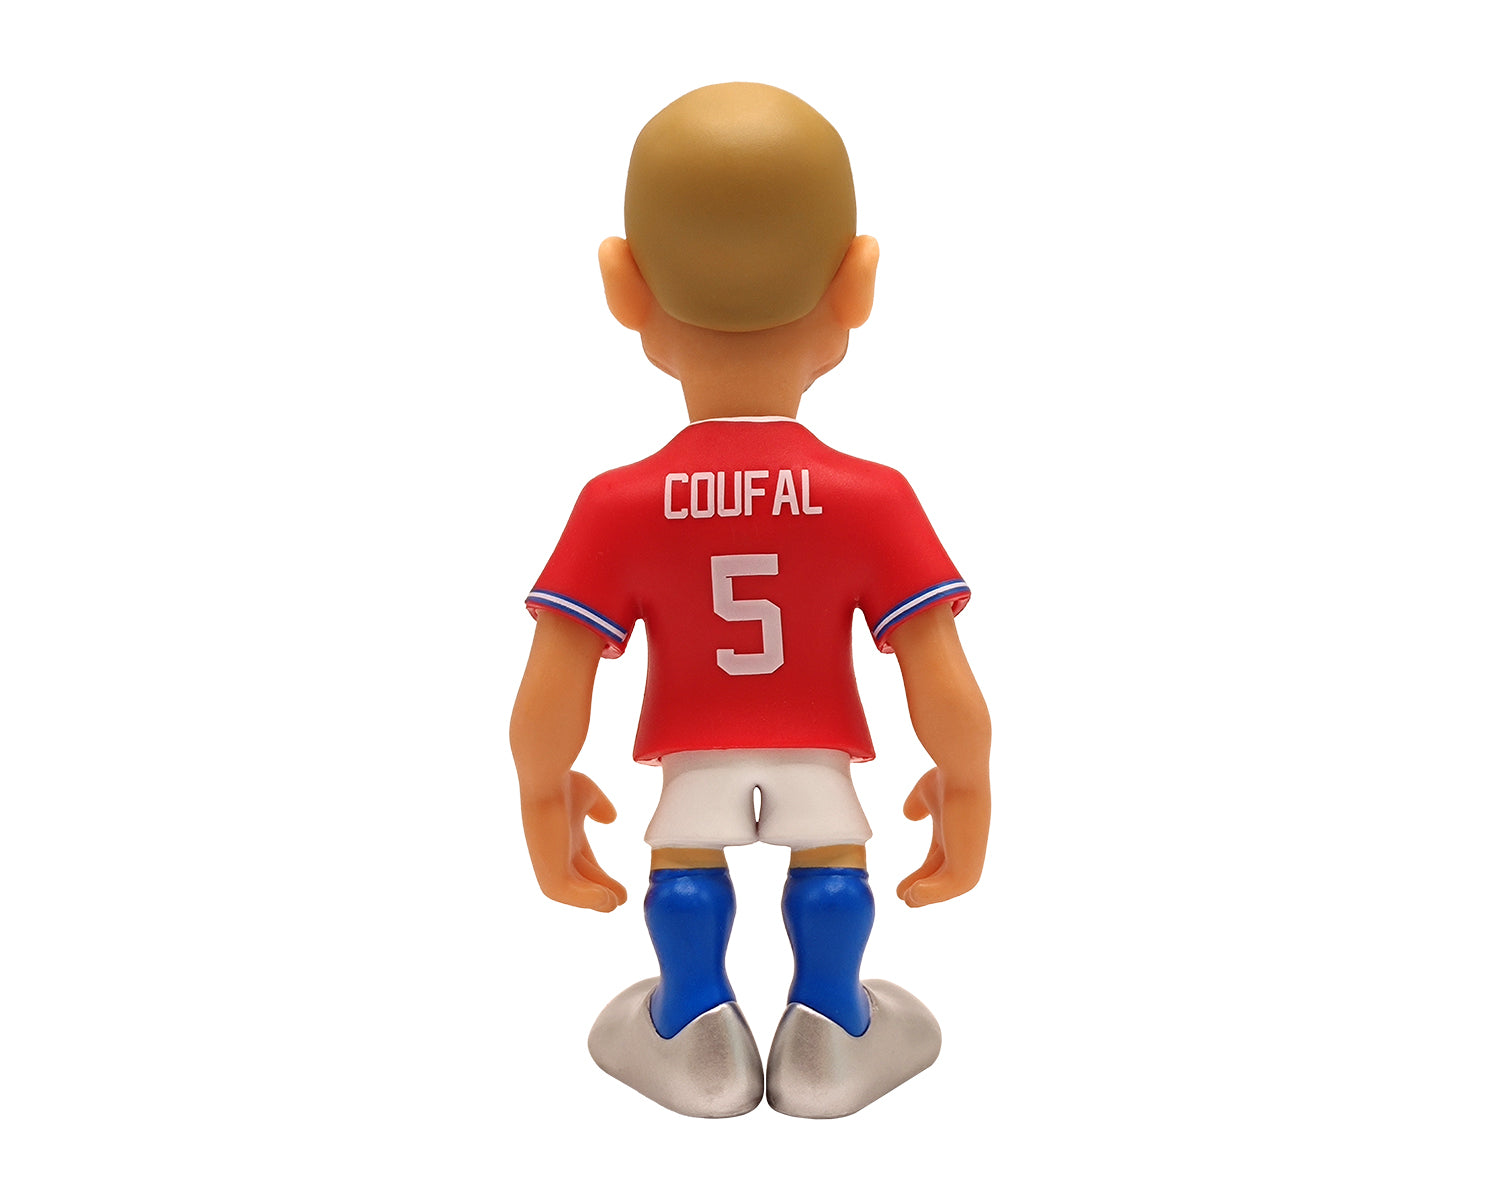 Minix -Football -CZ -COUFAL -Figurine -12 cm